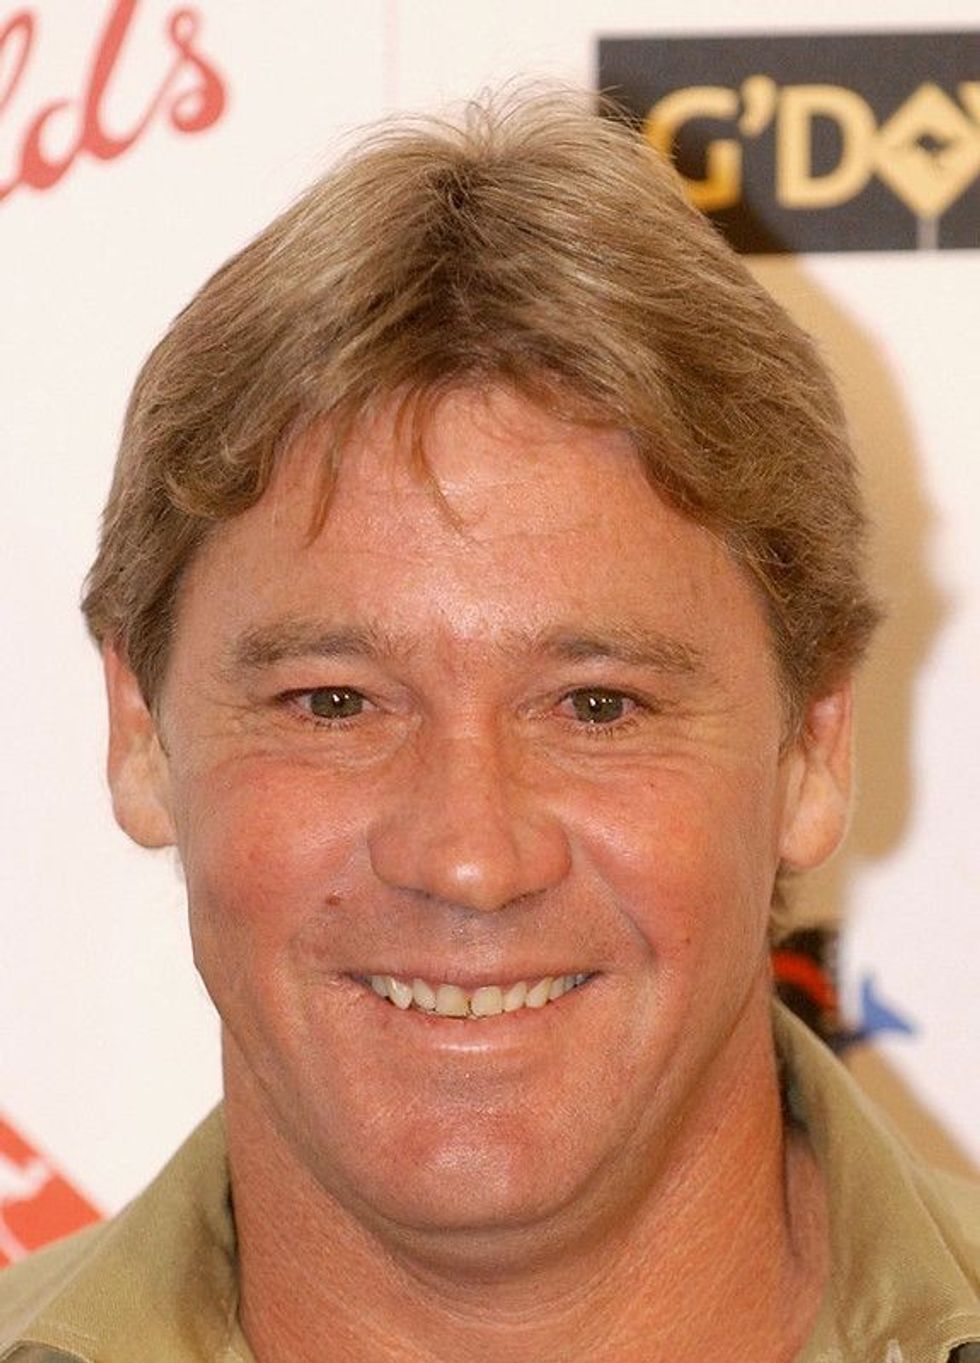 Candid Image of Steve Irwin